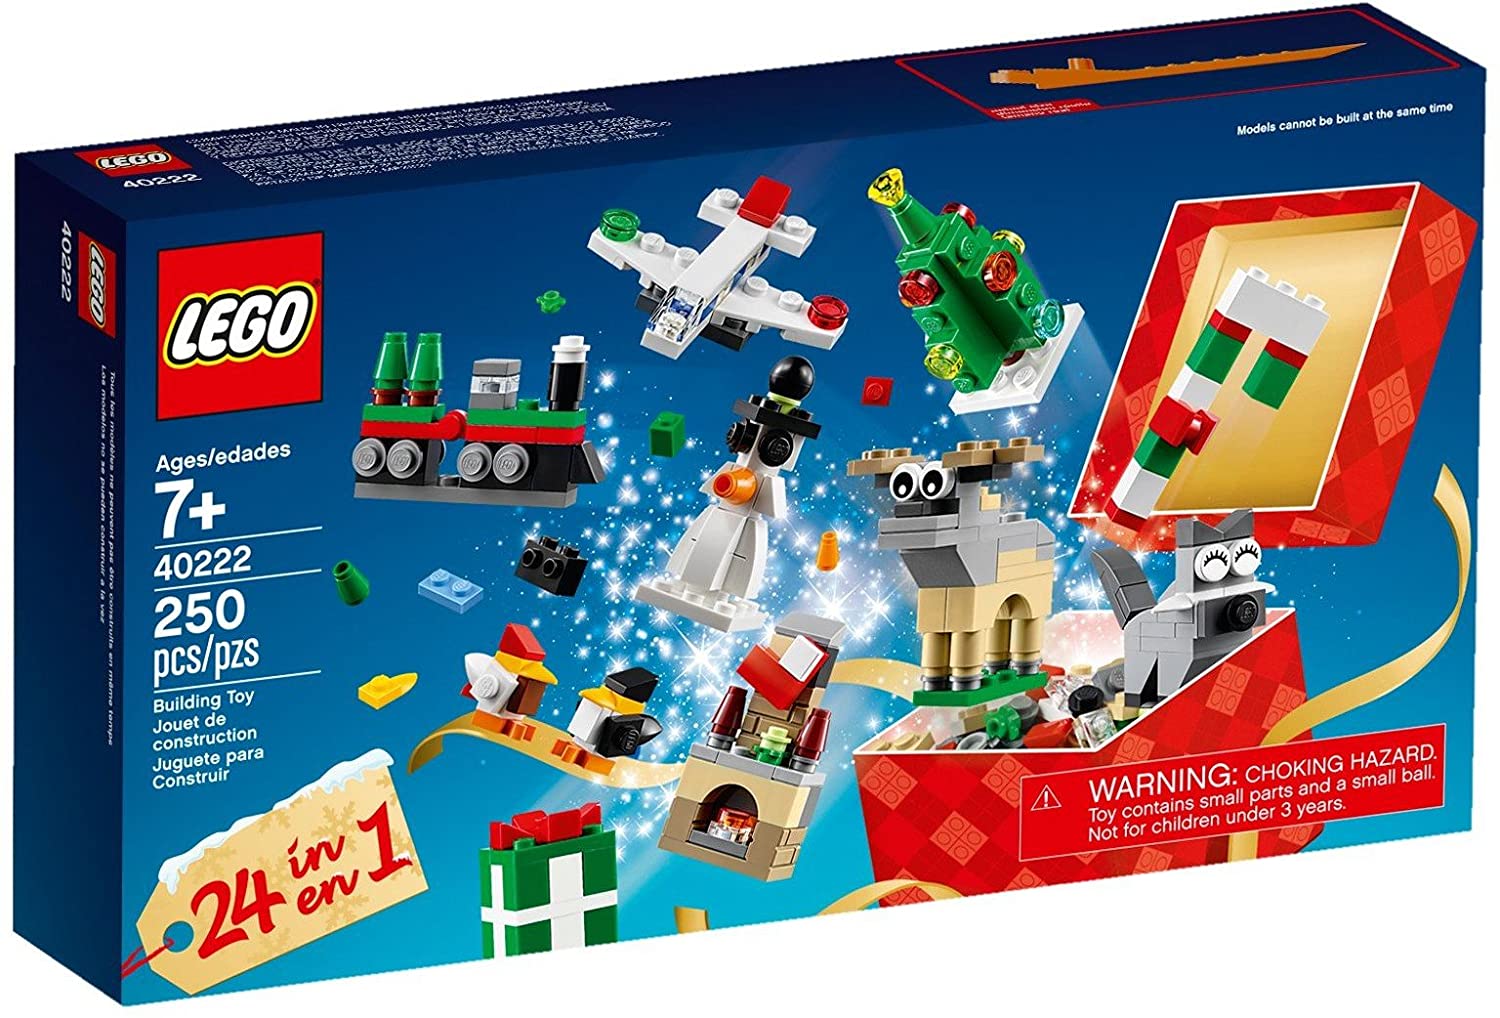 Immagine relativa a LEGO 40222 Adventskalender Bauspaß